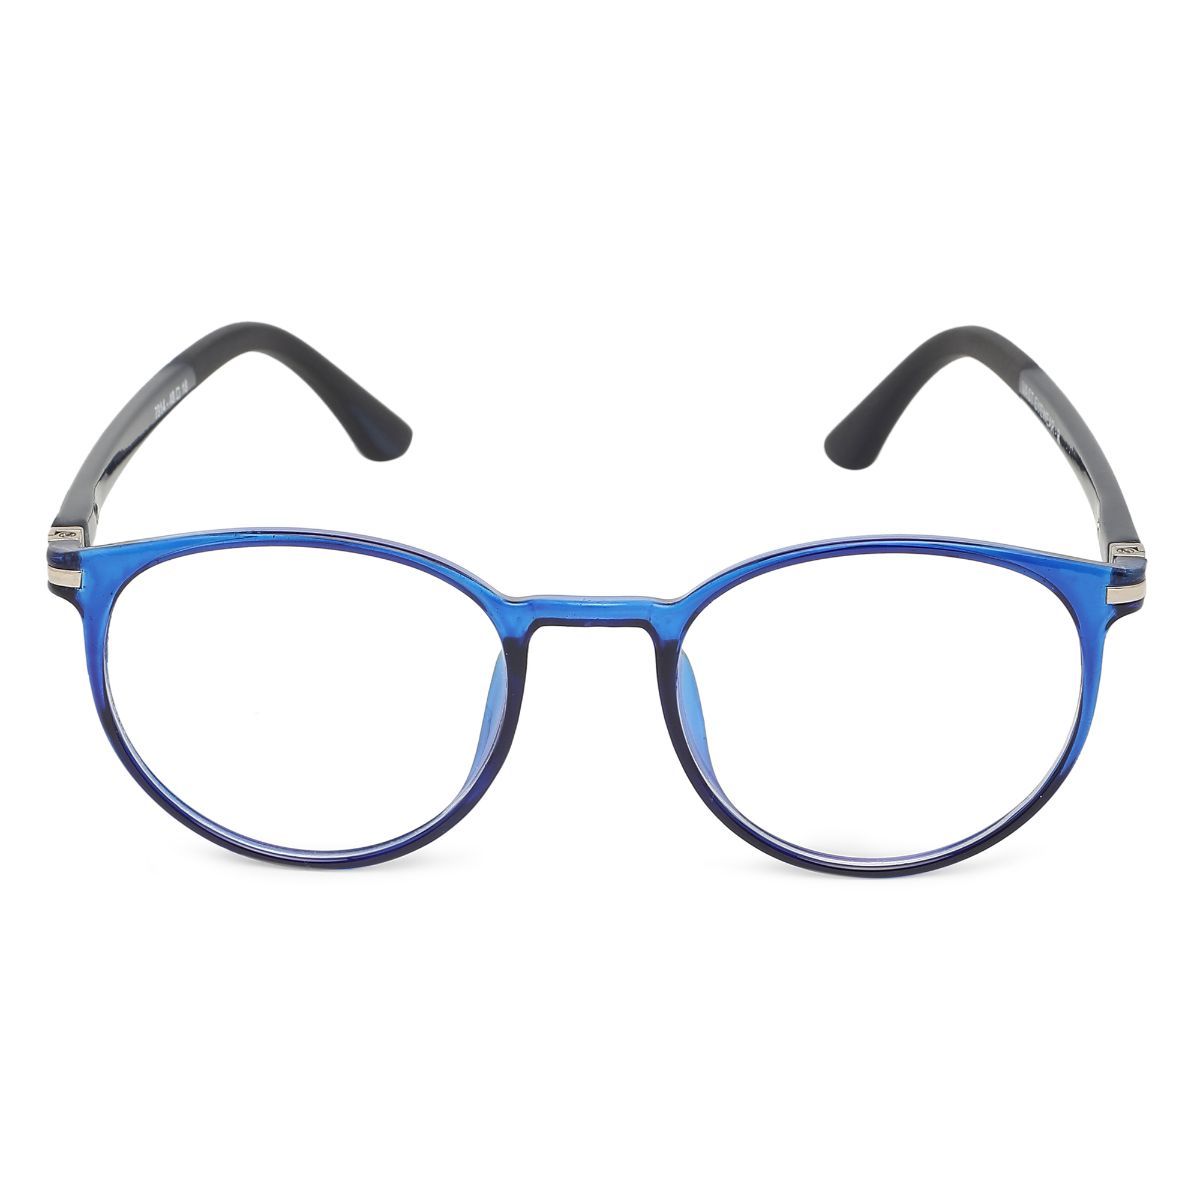 VAST Unisex Round Anti Glare UV Protection Full Frame Spectacles - (Zero Power) (7914)